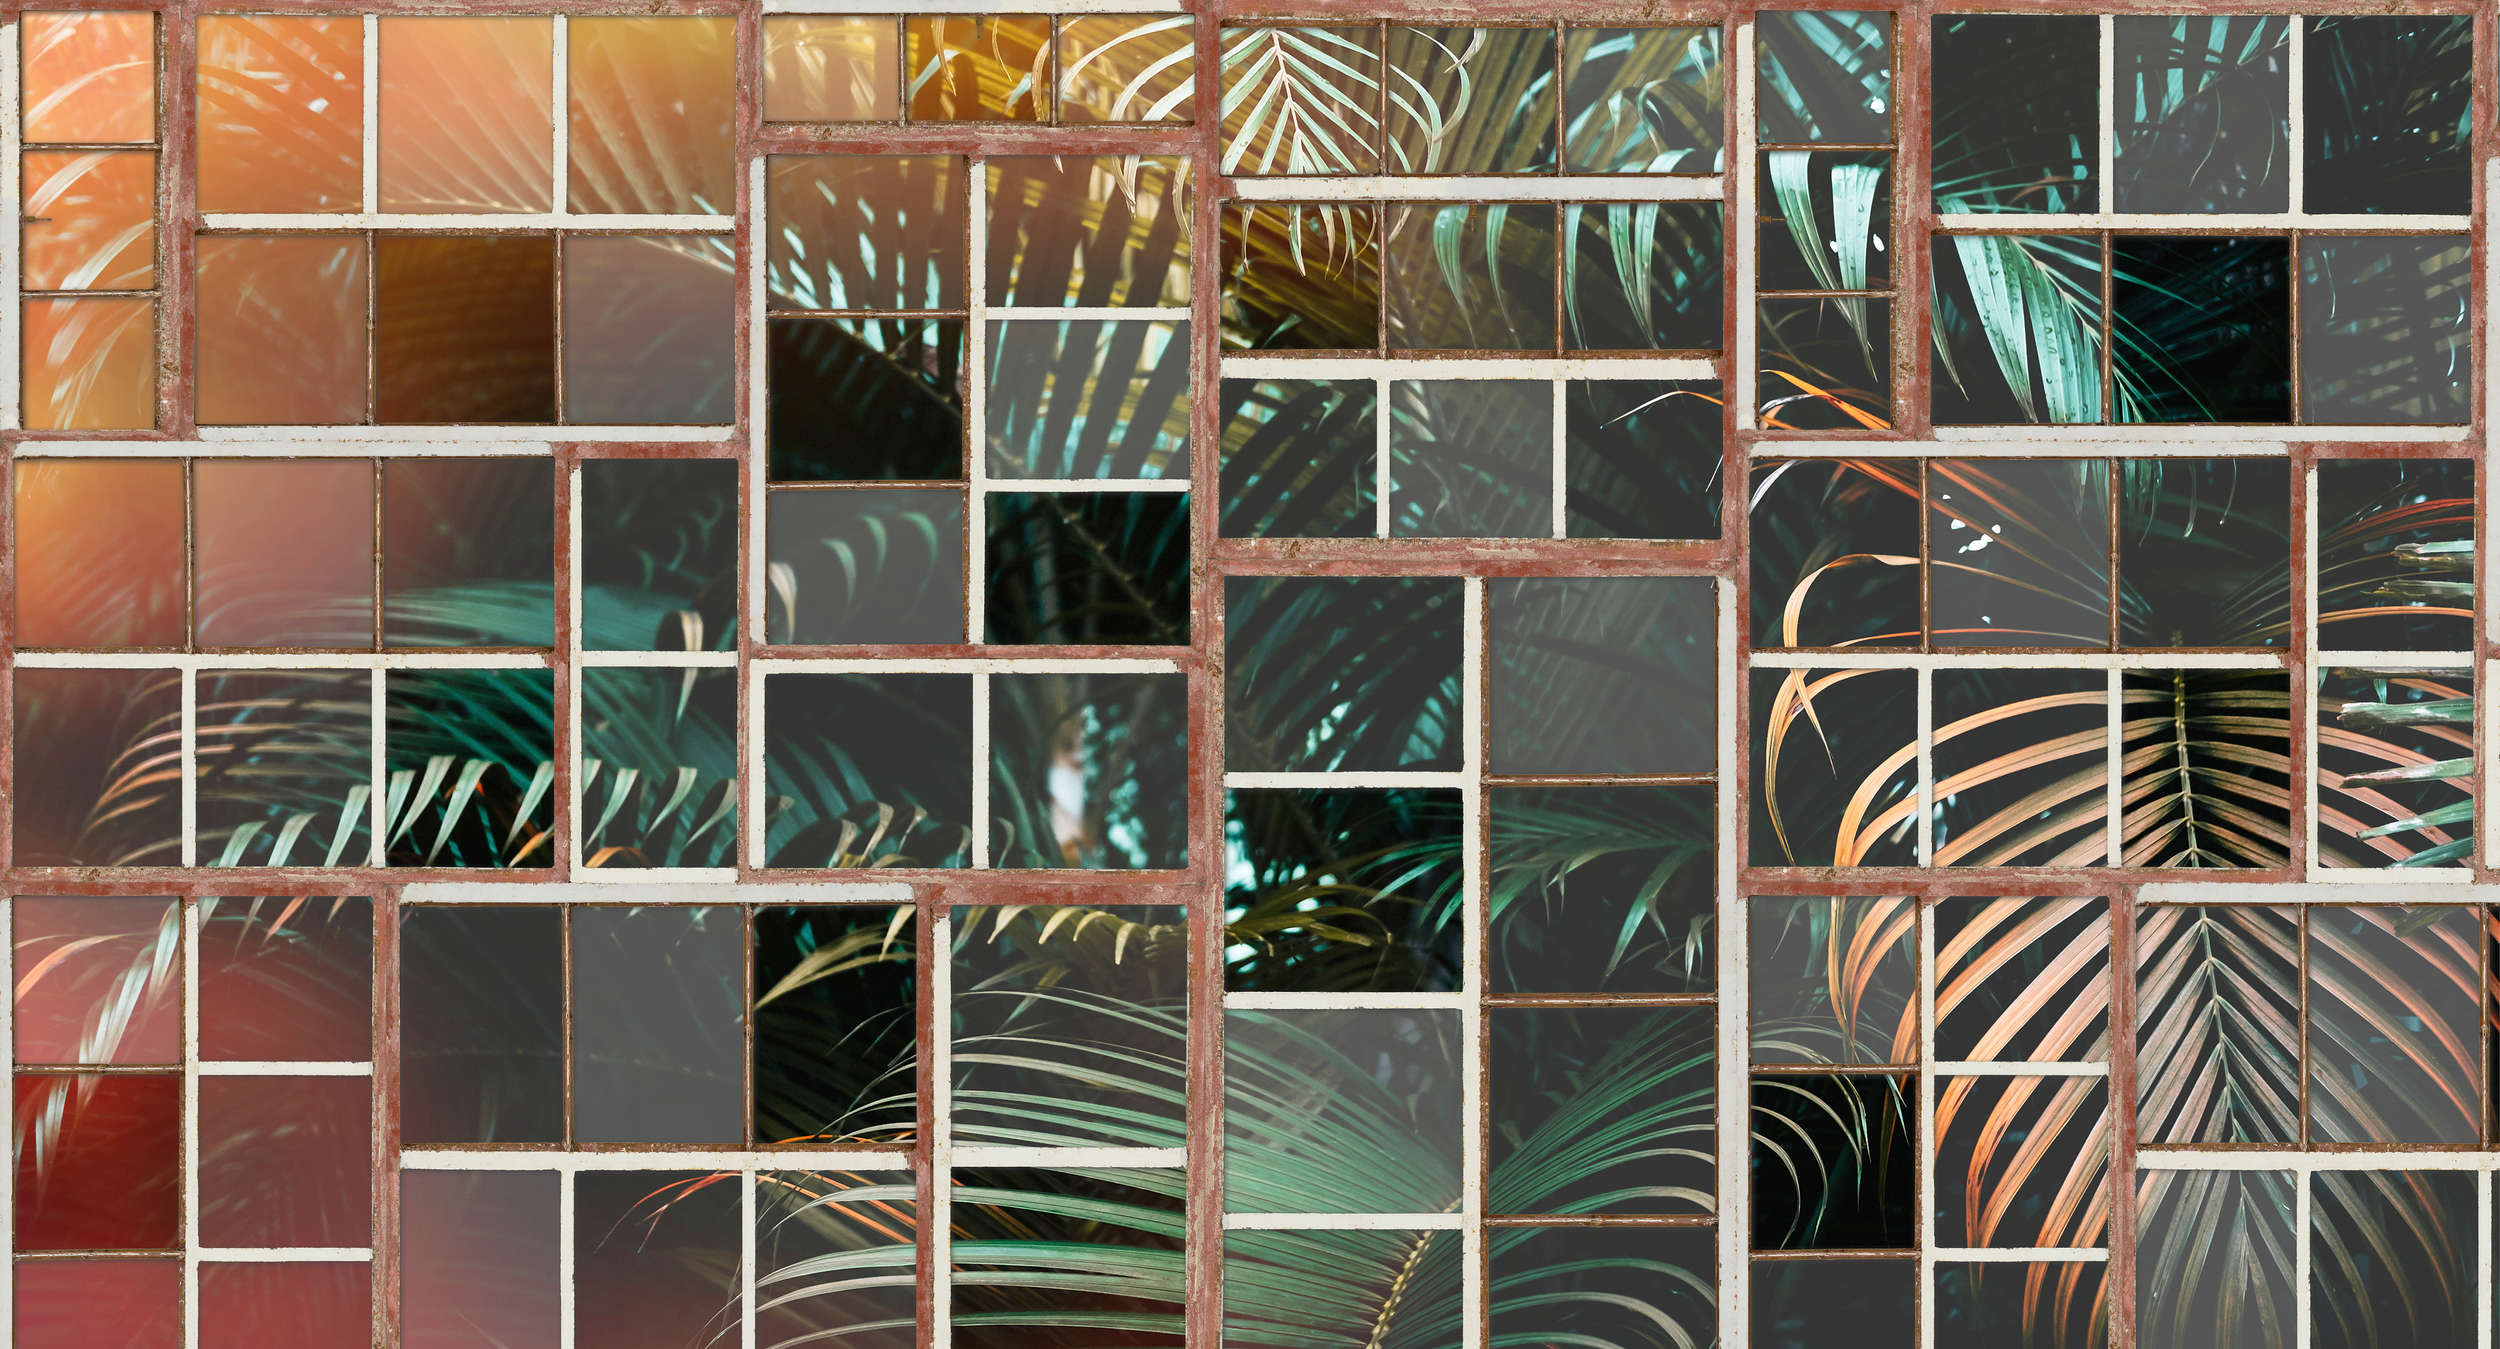             Photo wallpaper with view, retro window & ferns - brown, white, green
        